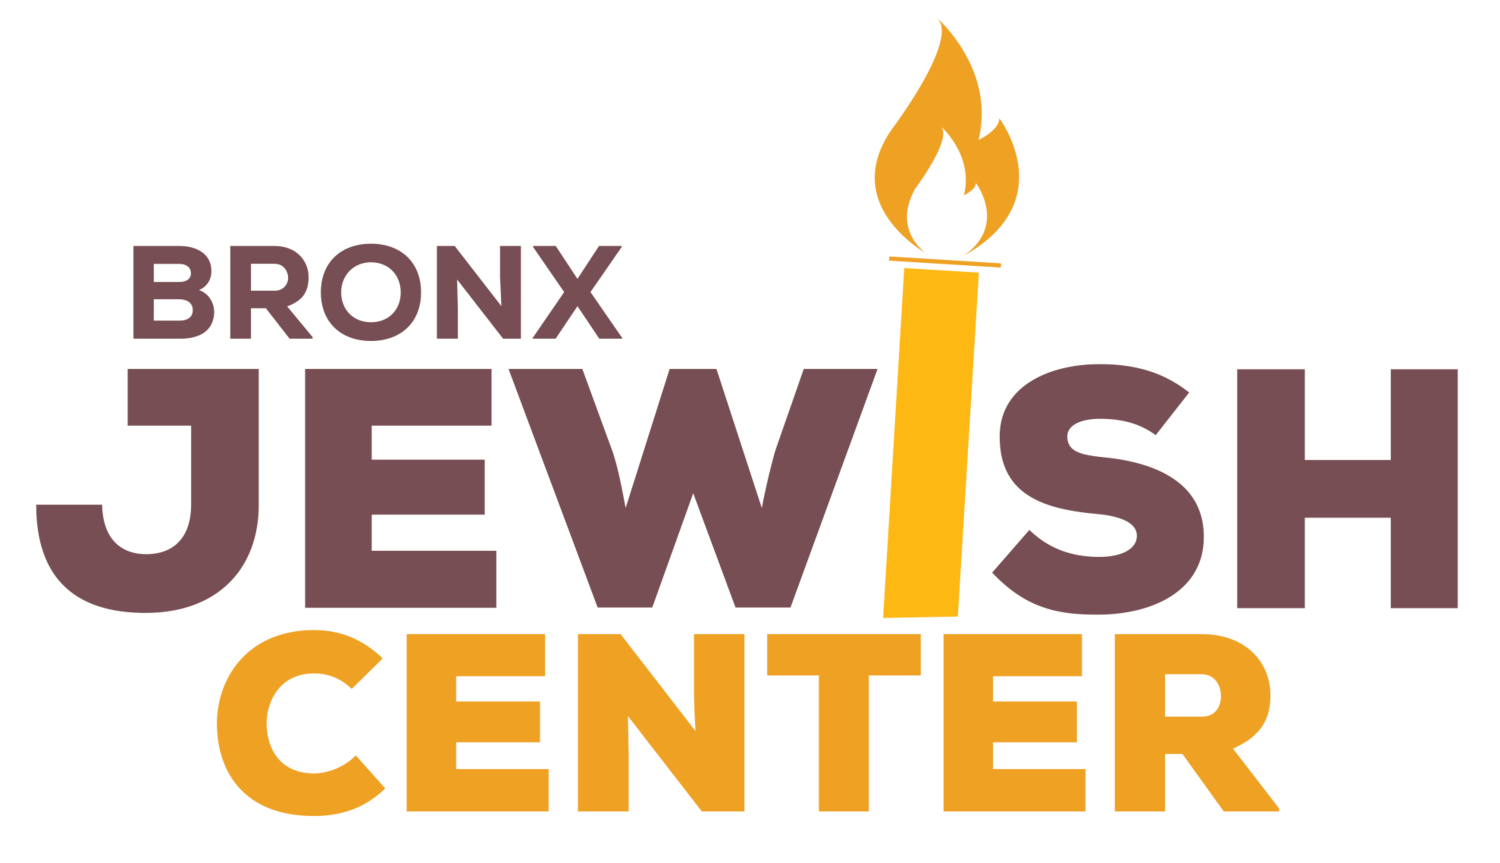 Bronx Jewish Center